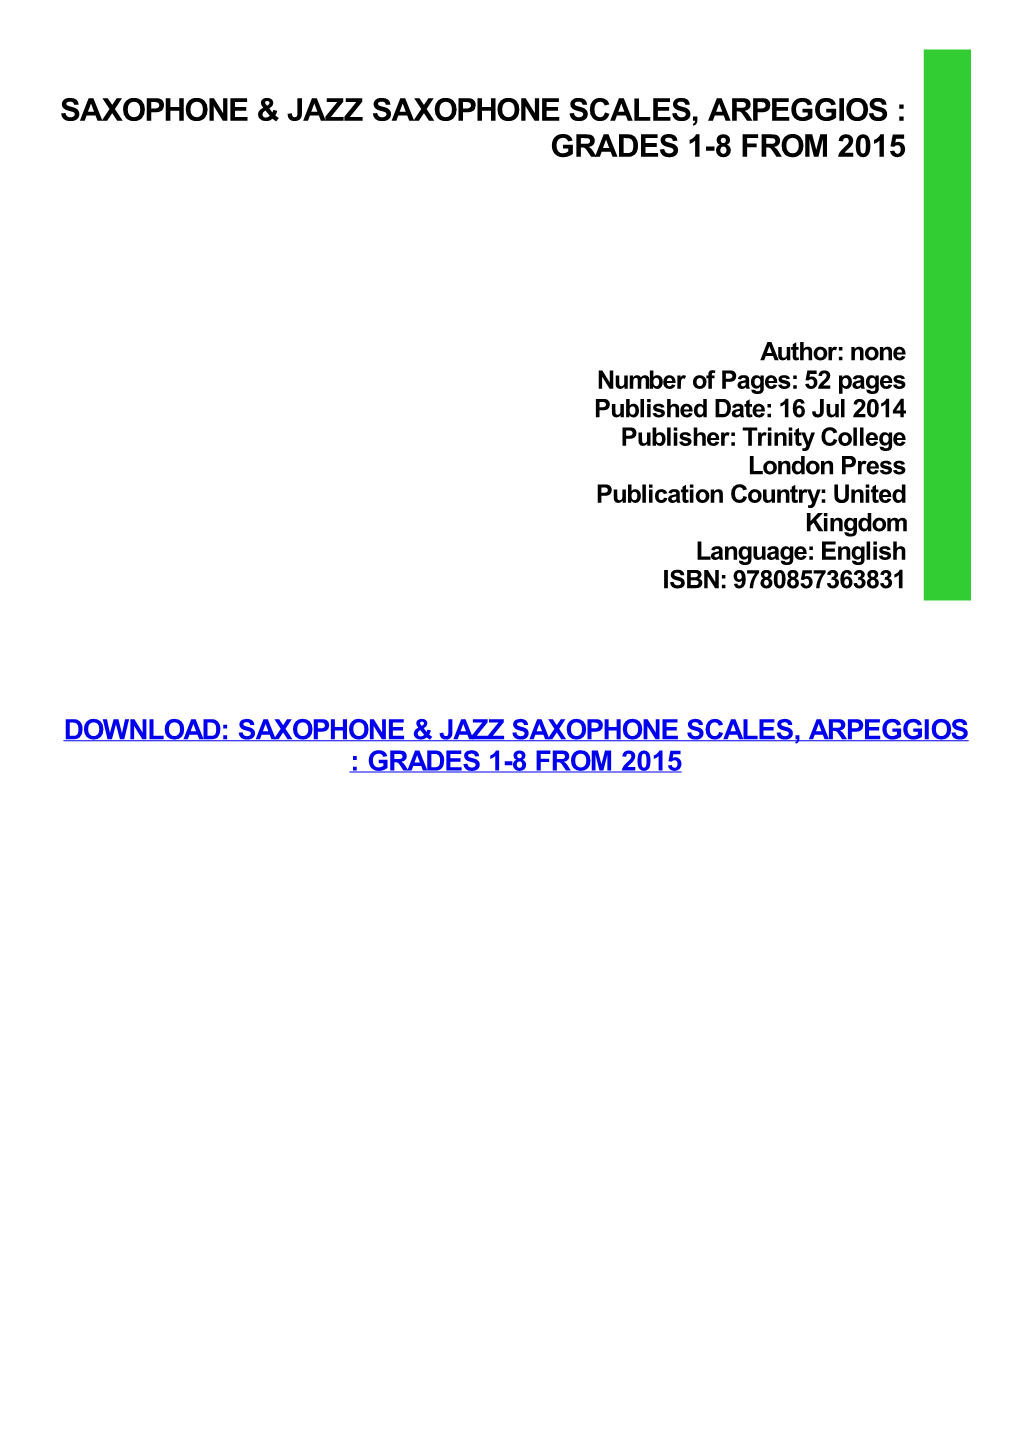 Saxophone & Jazz Saxophone Scales, Arpeggios : Grades 1-8 from 2015